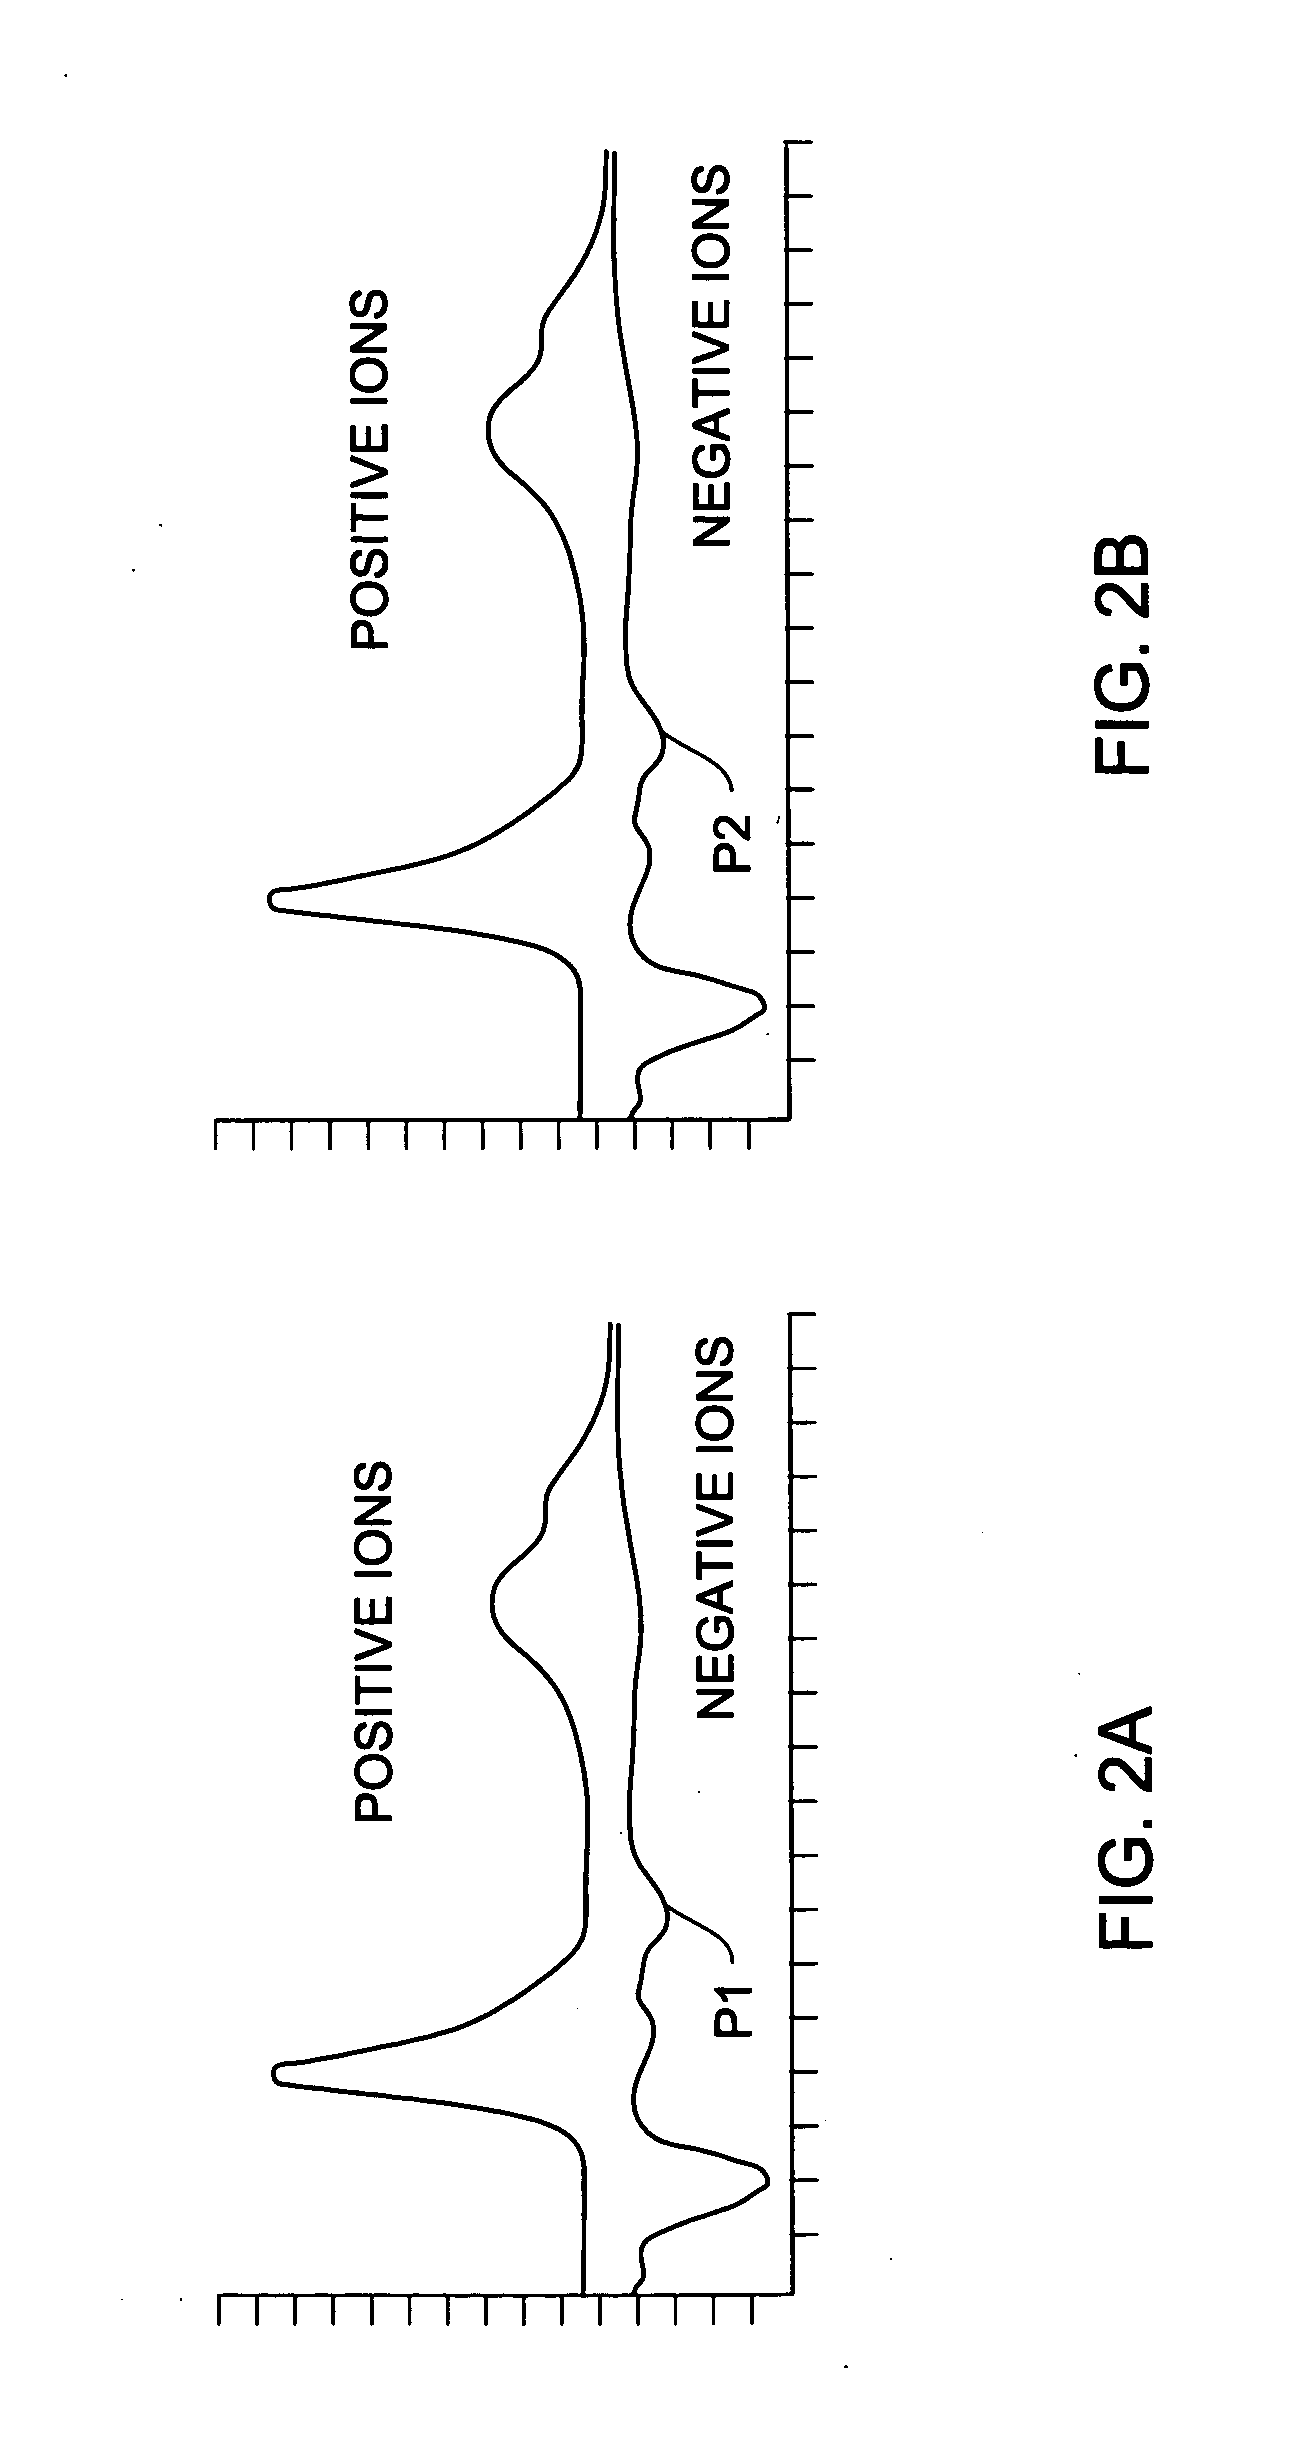 Method and apparatus for plasma generation